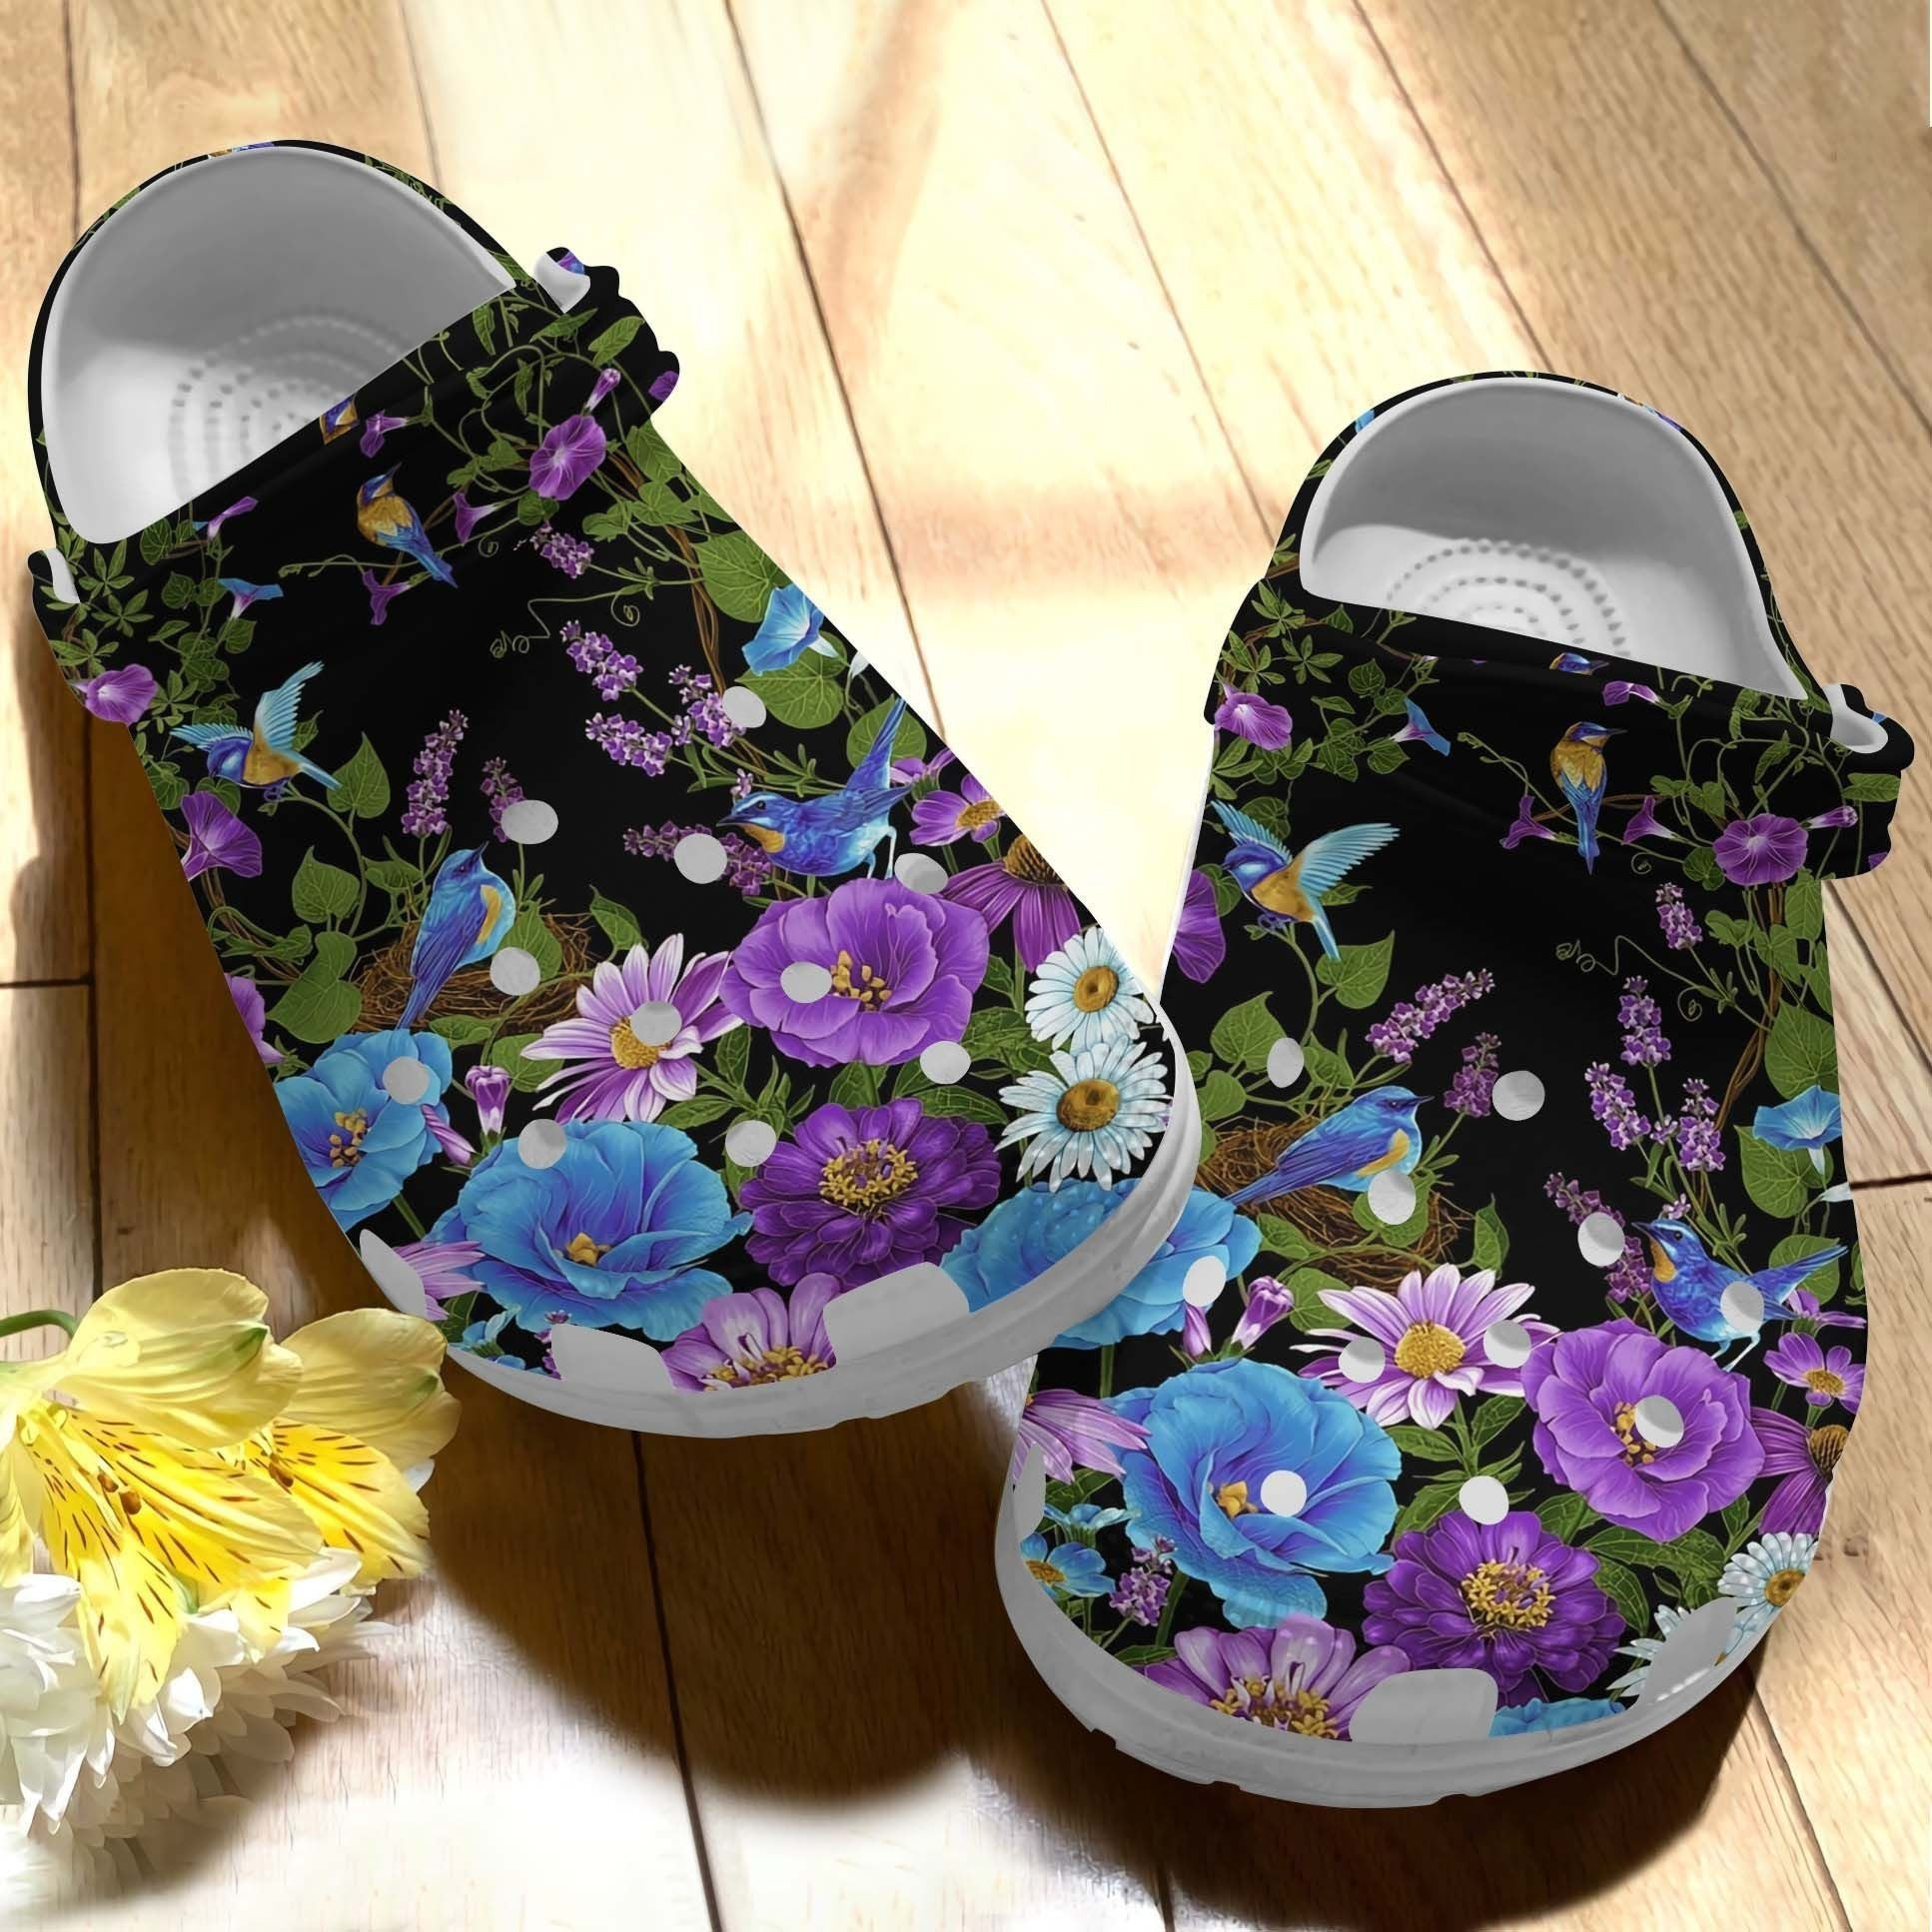 Daisy Flower Shoe - Bird In Yard Crocbland Clog Gift For Grandma Mother